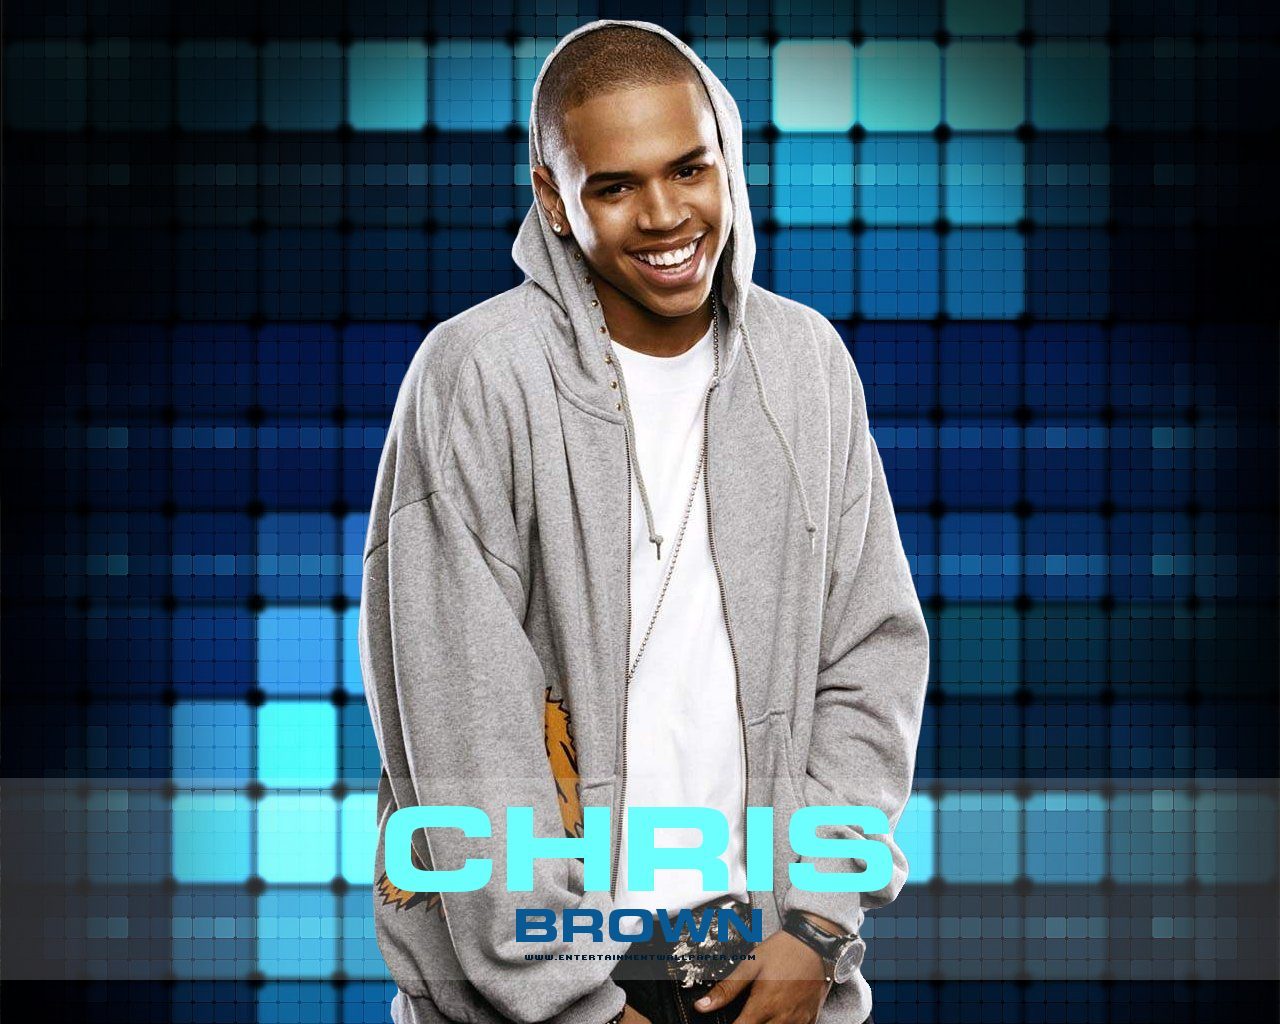 Chris Brown Wallpaper HD Early